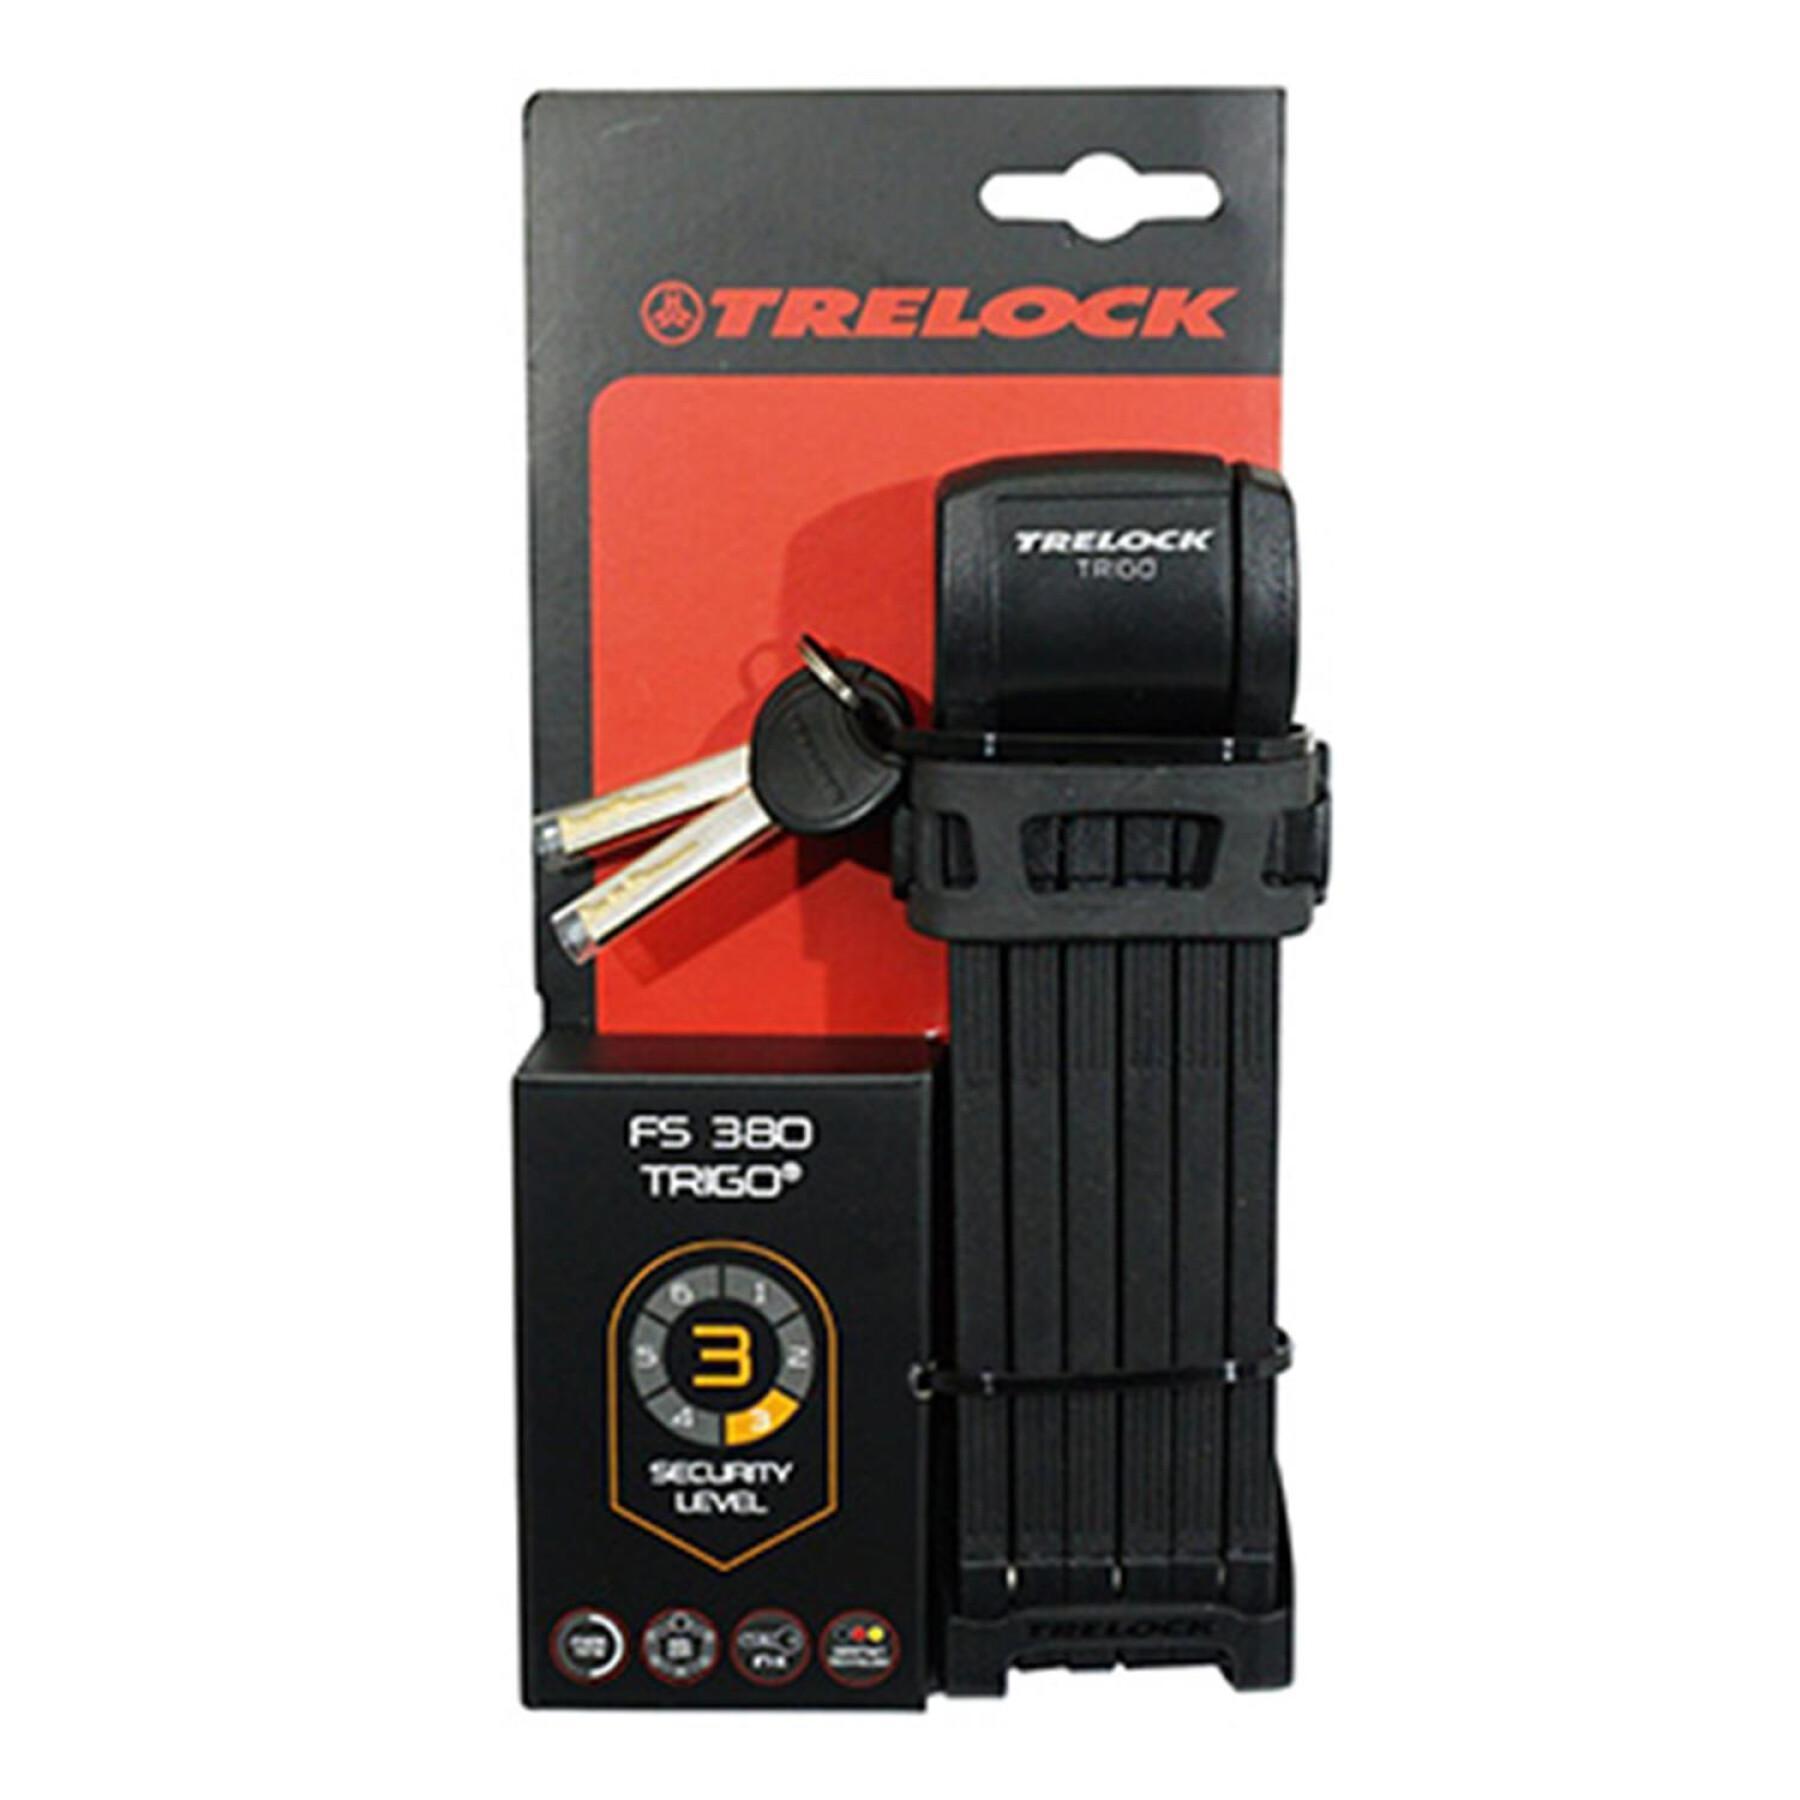 Flexible faltbare Schloss Trelock Trigo + support FS300 85 cm